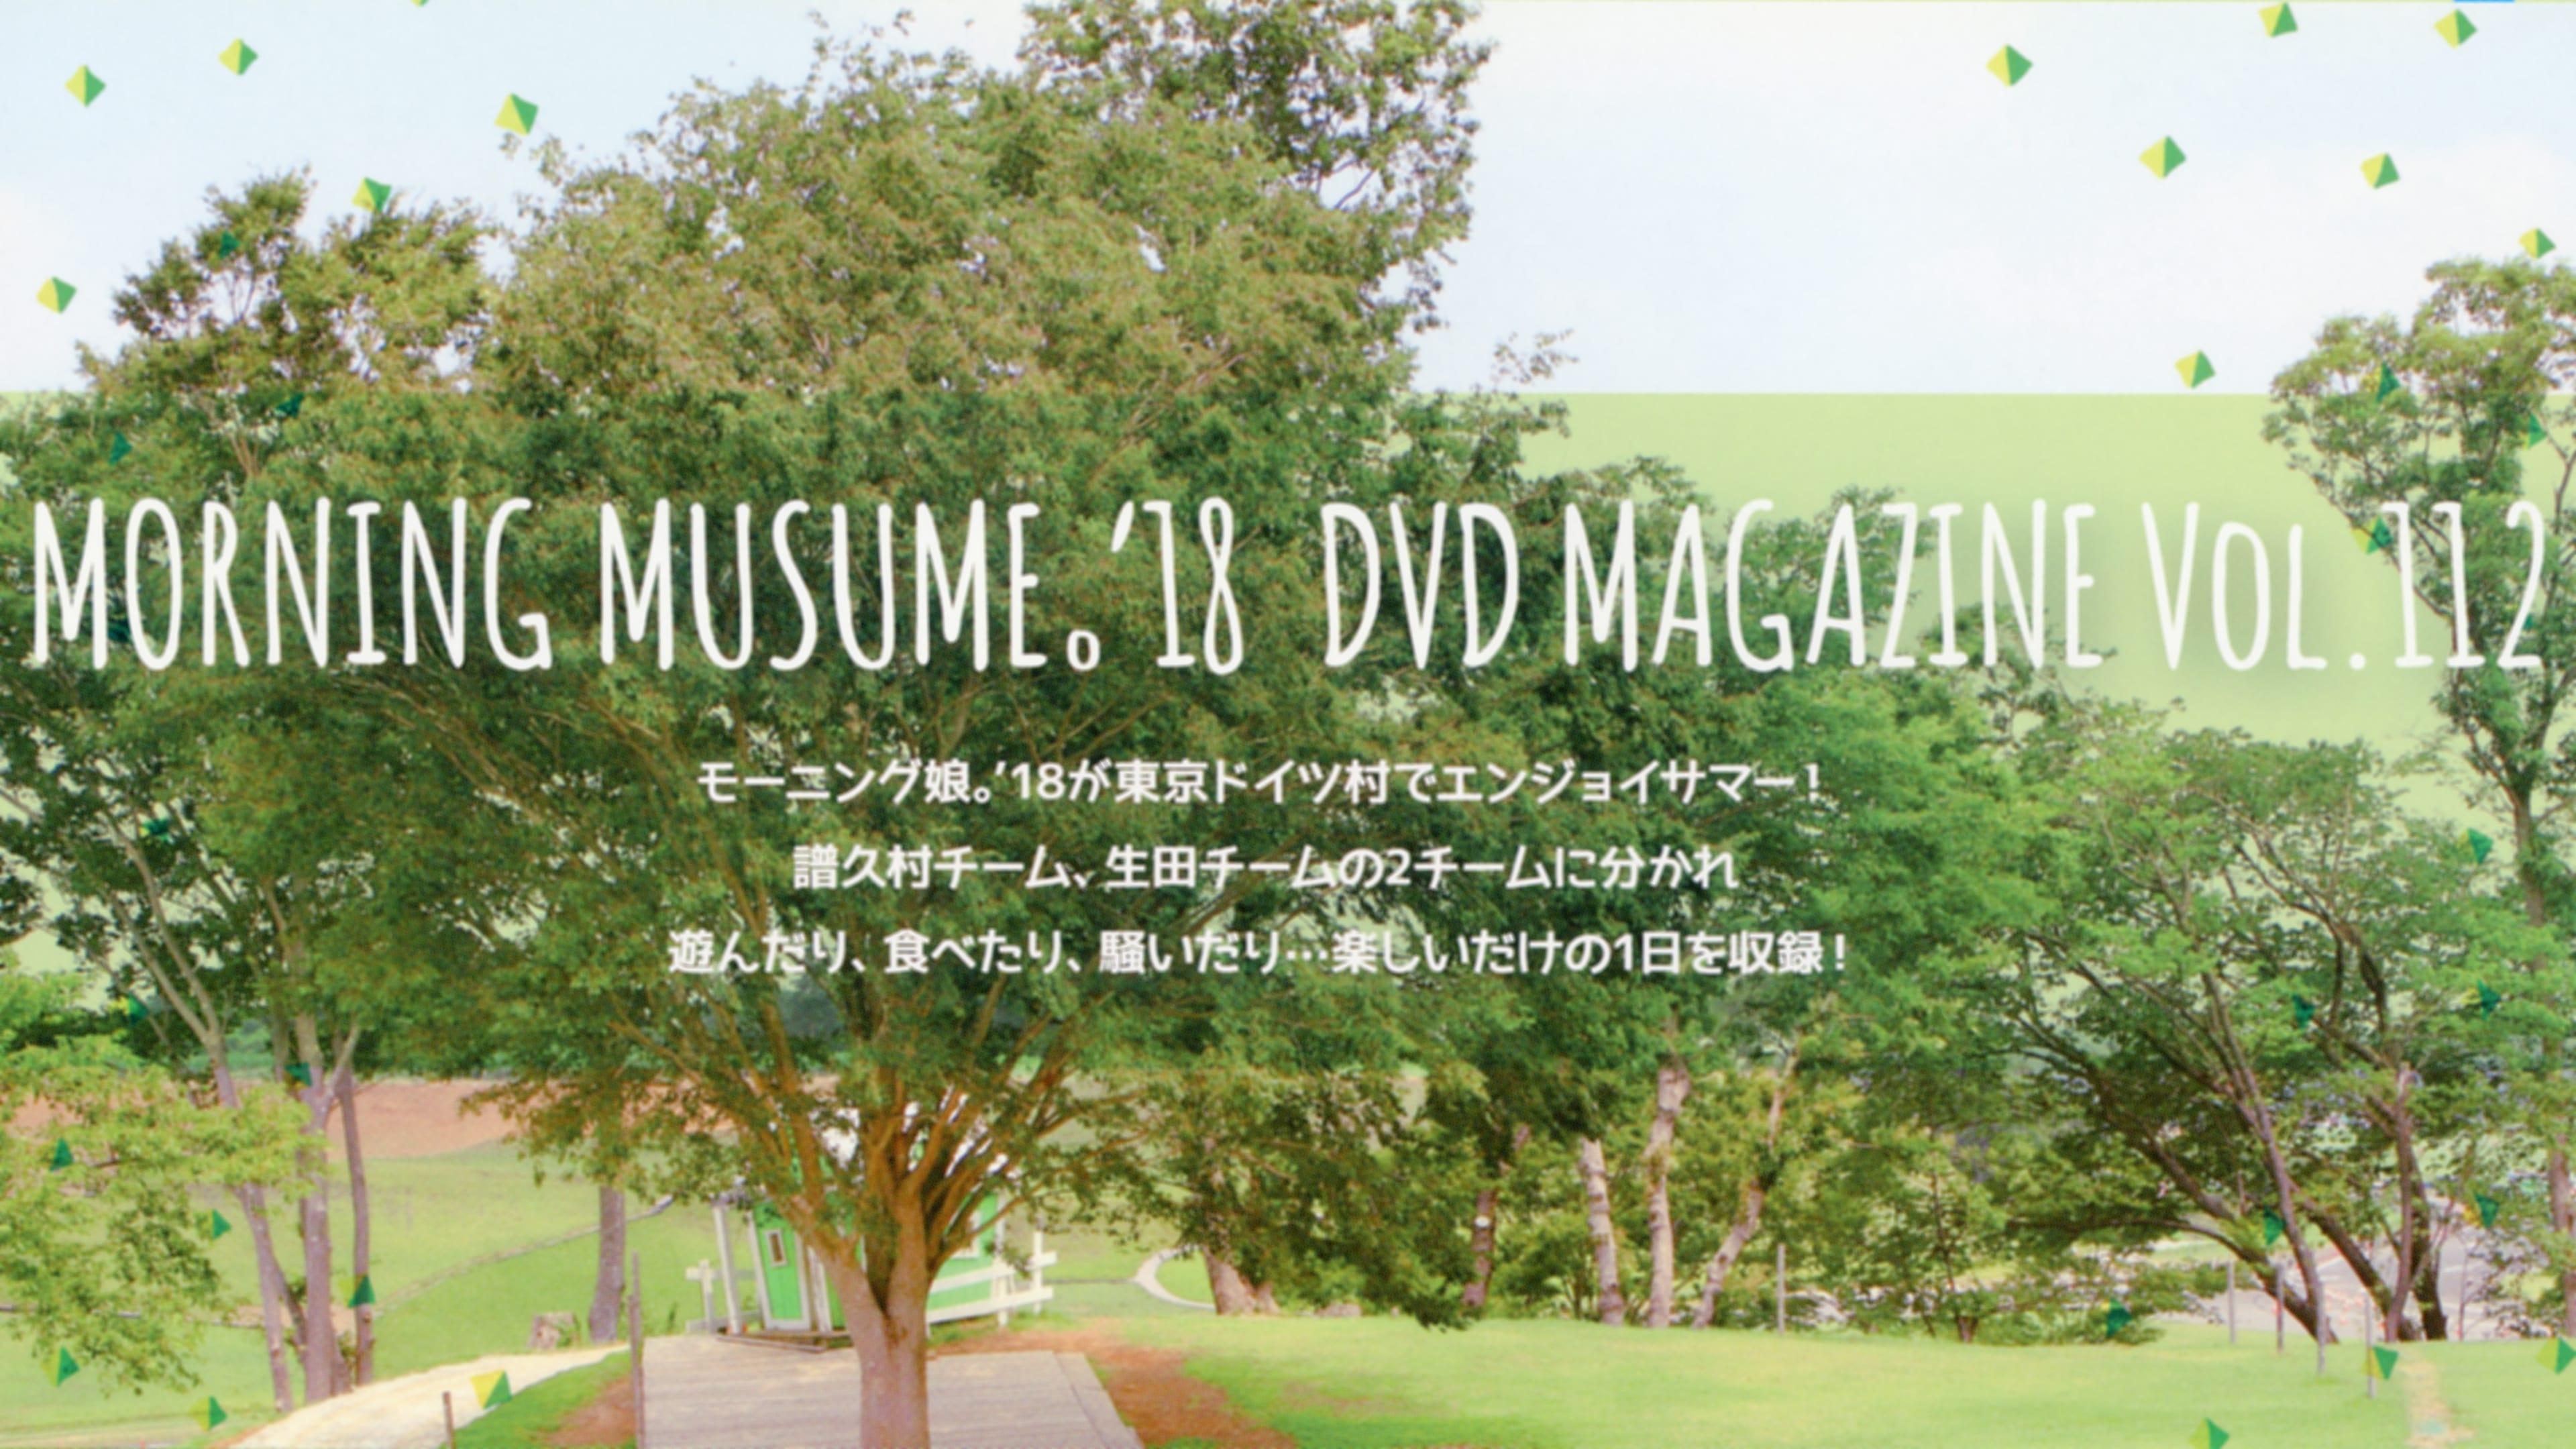 Morning Musume.'18 DVD Magazine Vol.112 backdrop